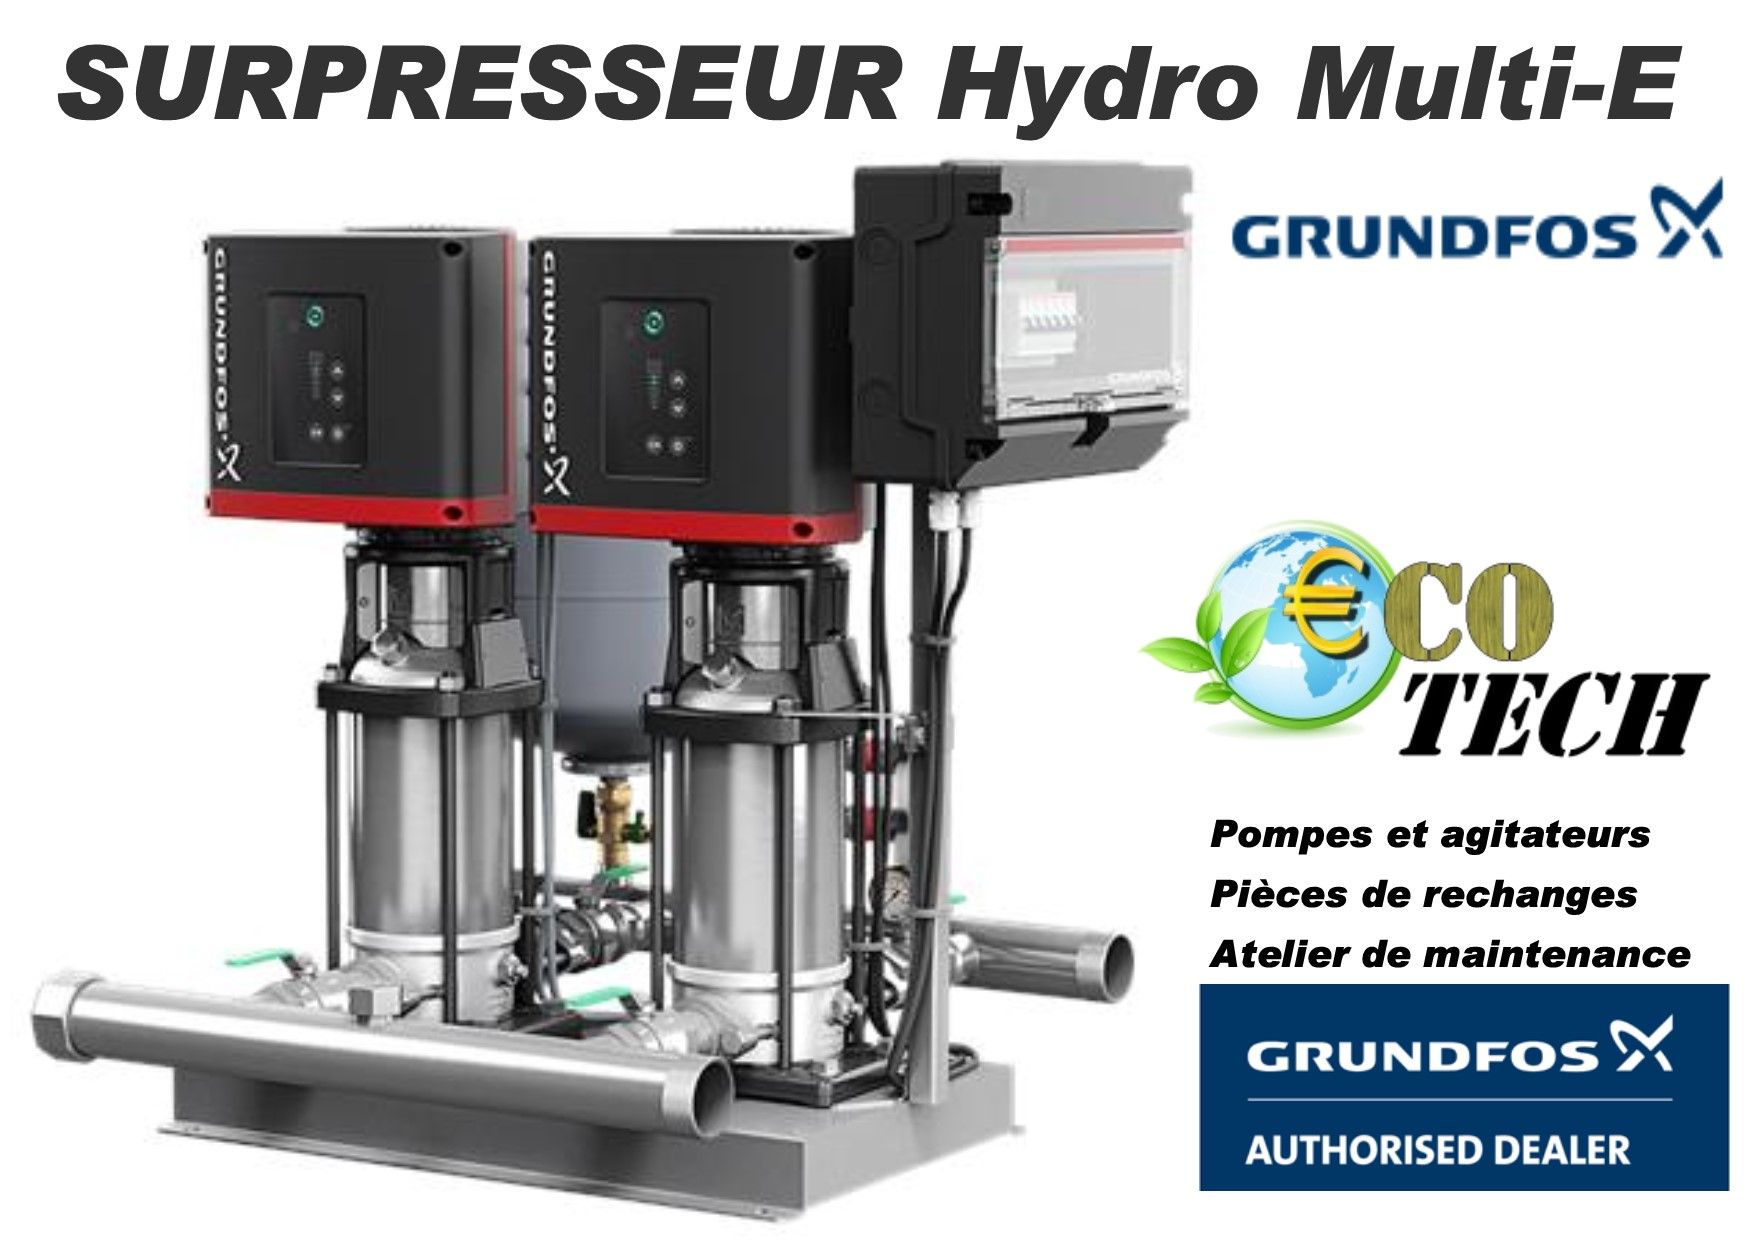 Surpresseur hydro multi-e grundfos distributeur eco-tech france normandie_0